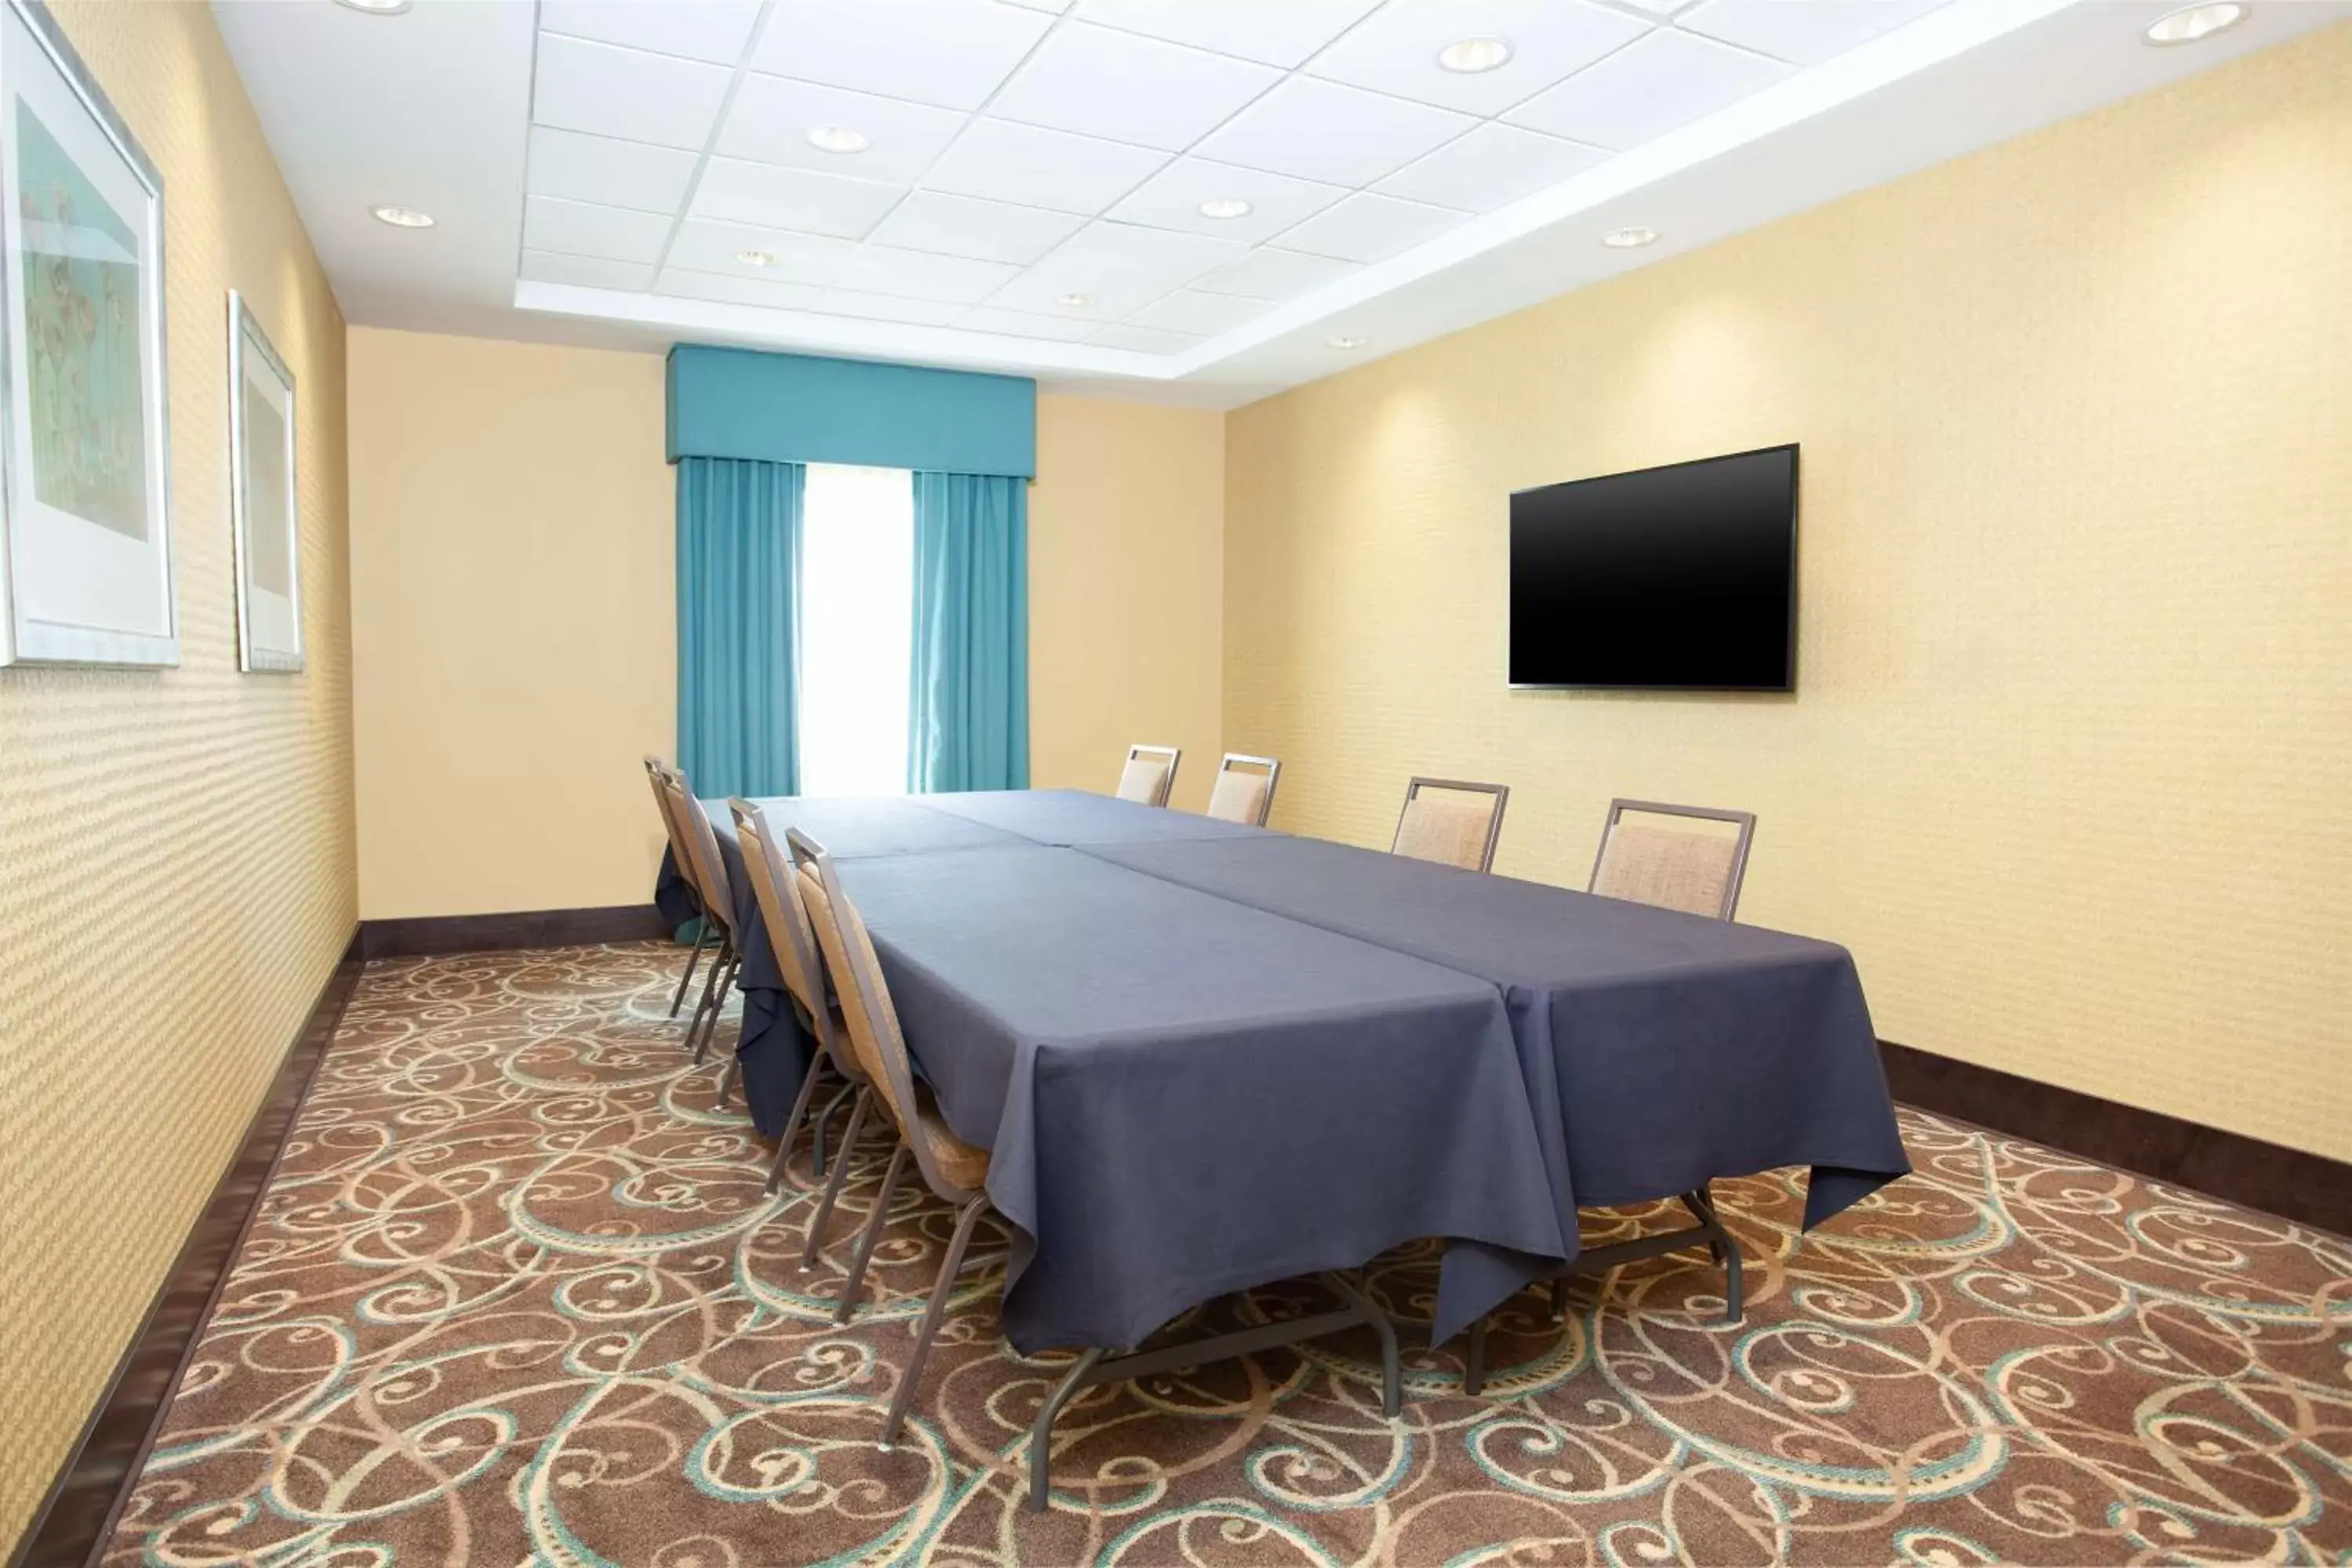 Meeting/conference room in Hampton Inn & Suites Niles/Warren, OH